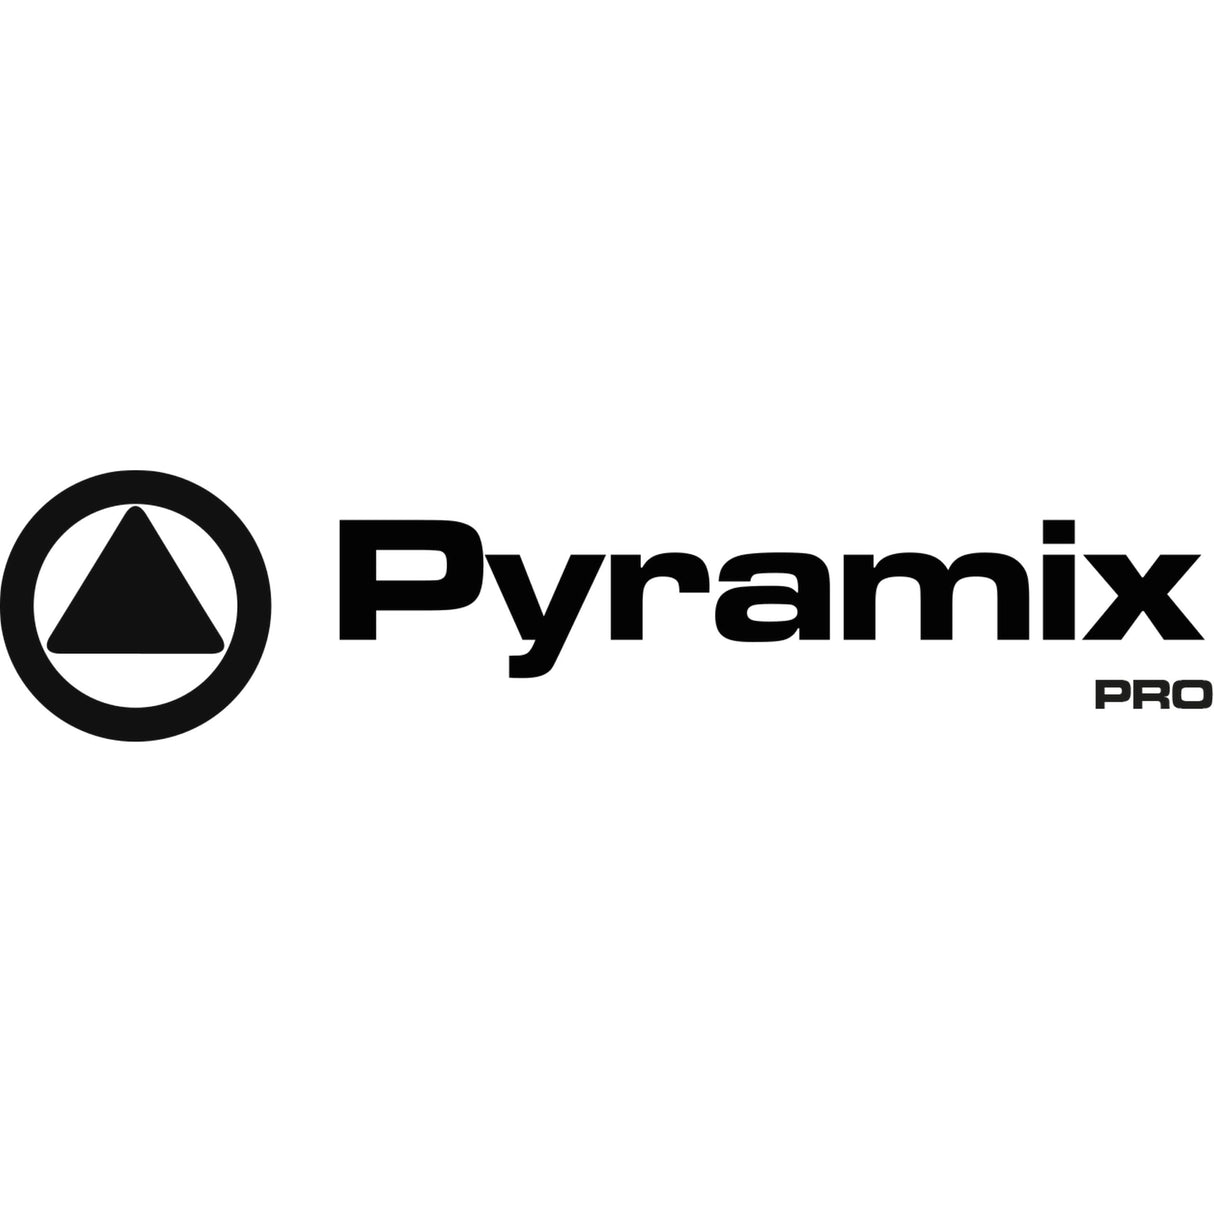 Merging Technologies Pyramix Native Pro Music Editing Software